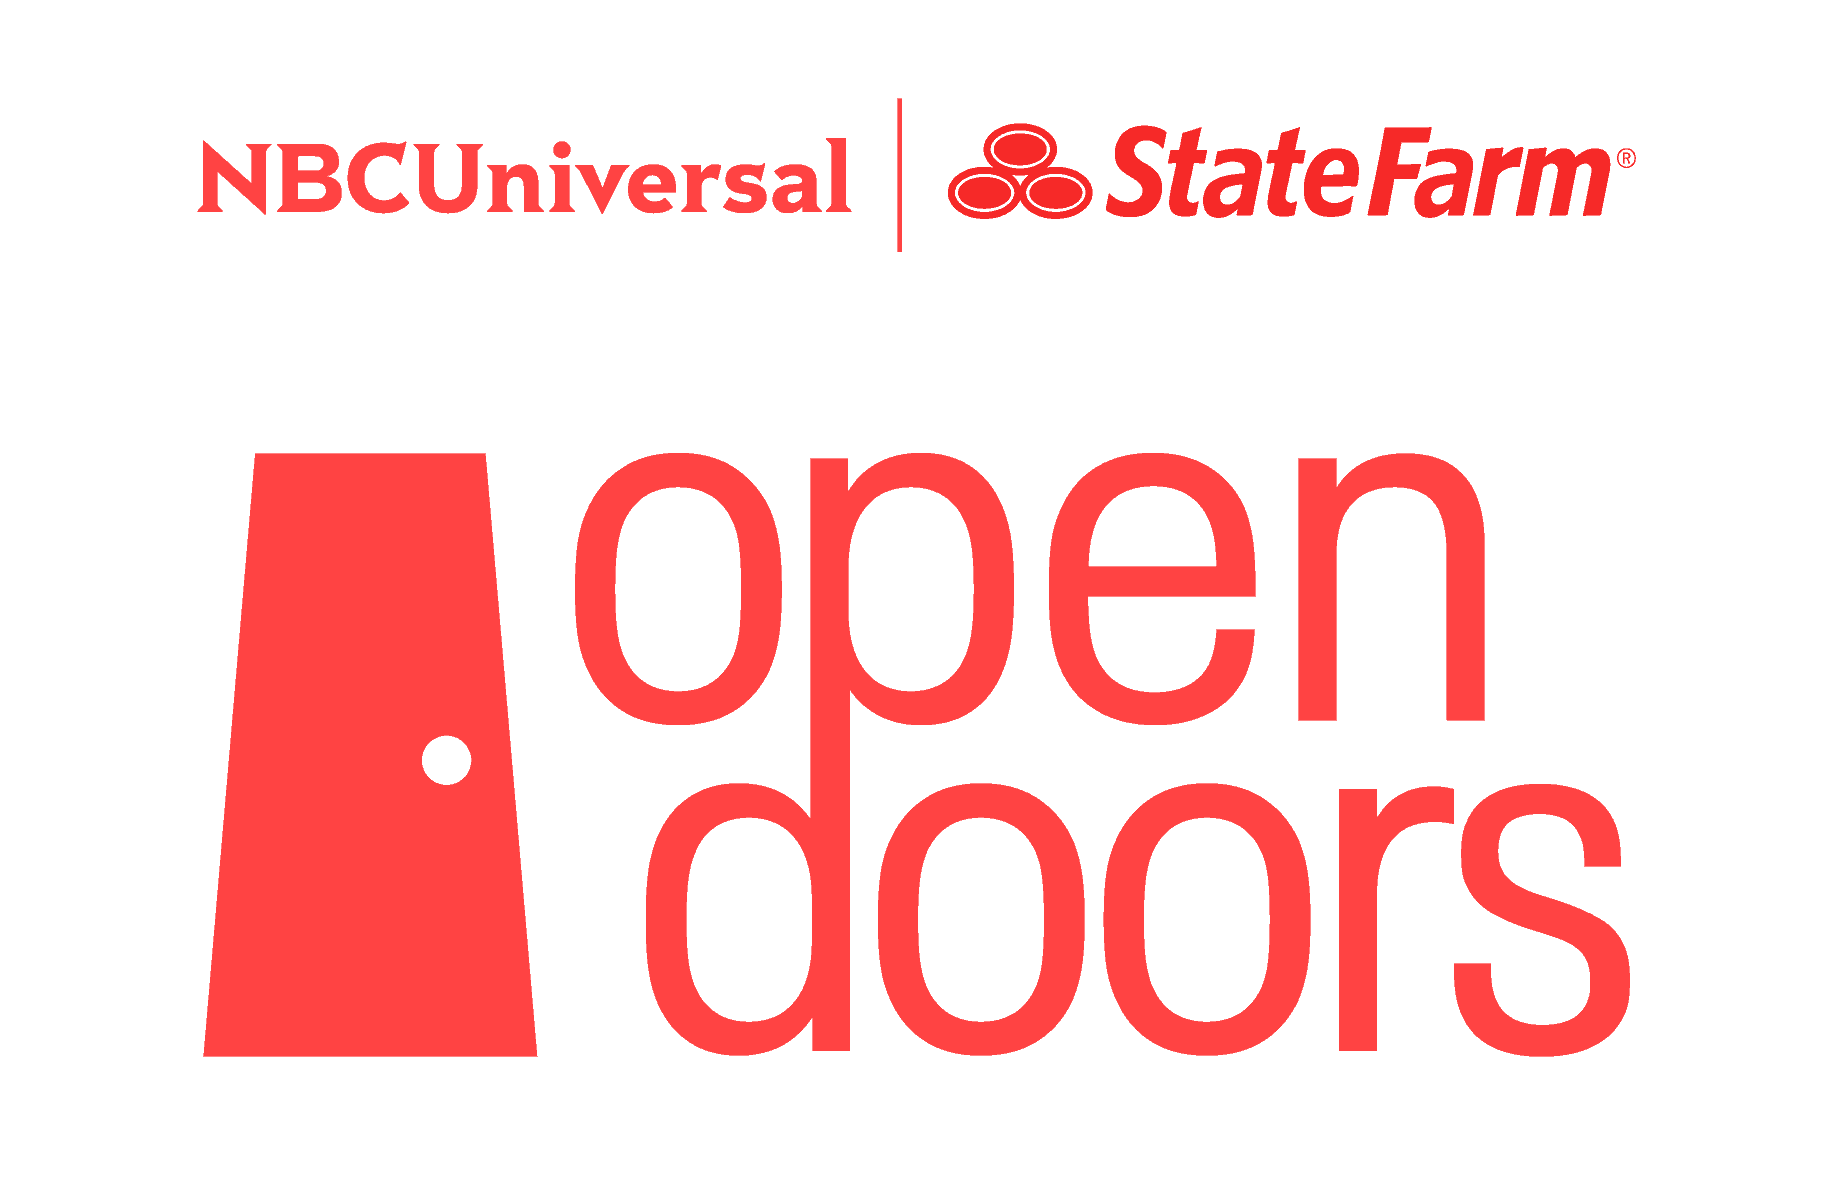 statefarm open doors